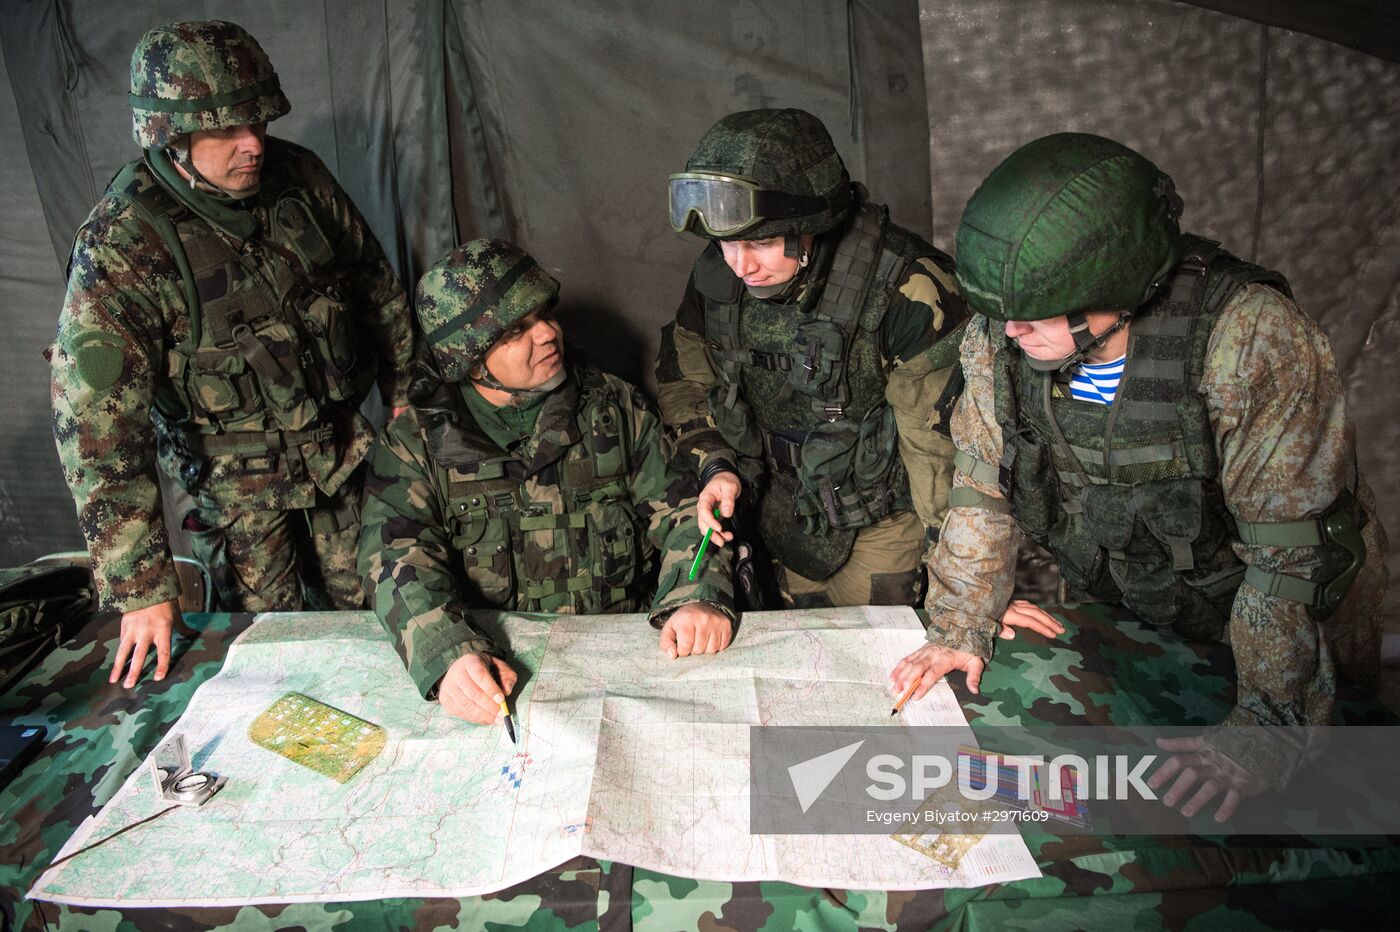 Slavic Brotherhood-2016 military exercise of Russia, Belarus and Serbia